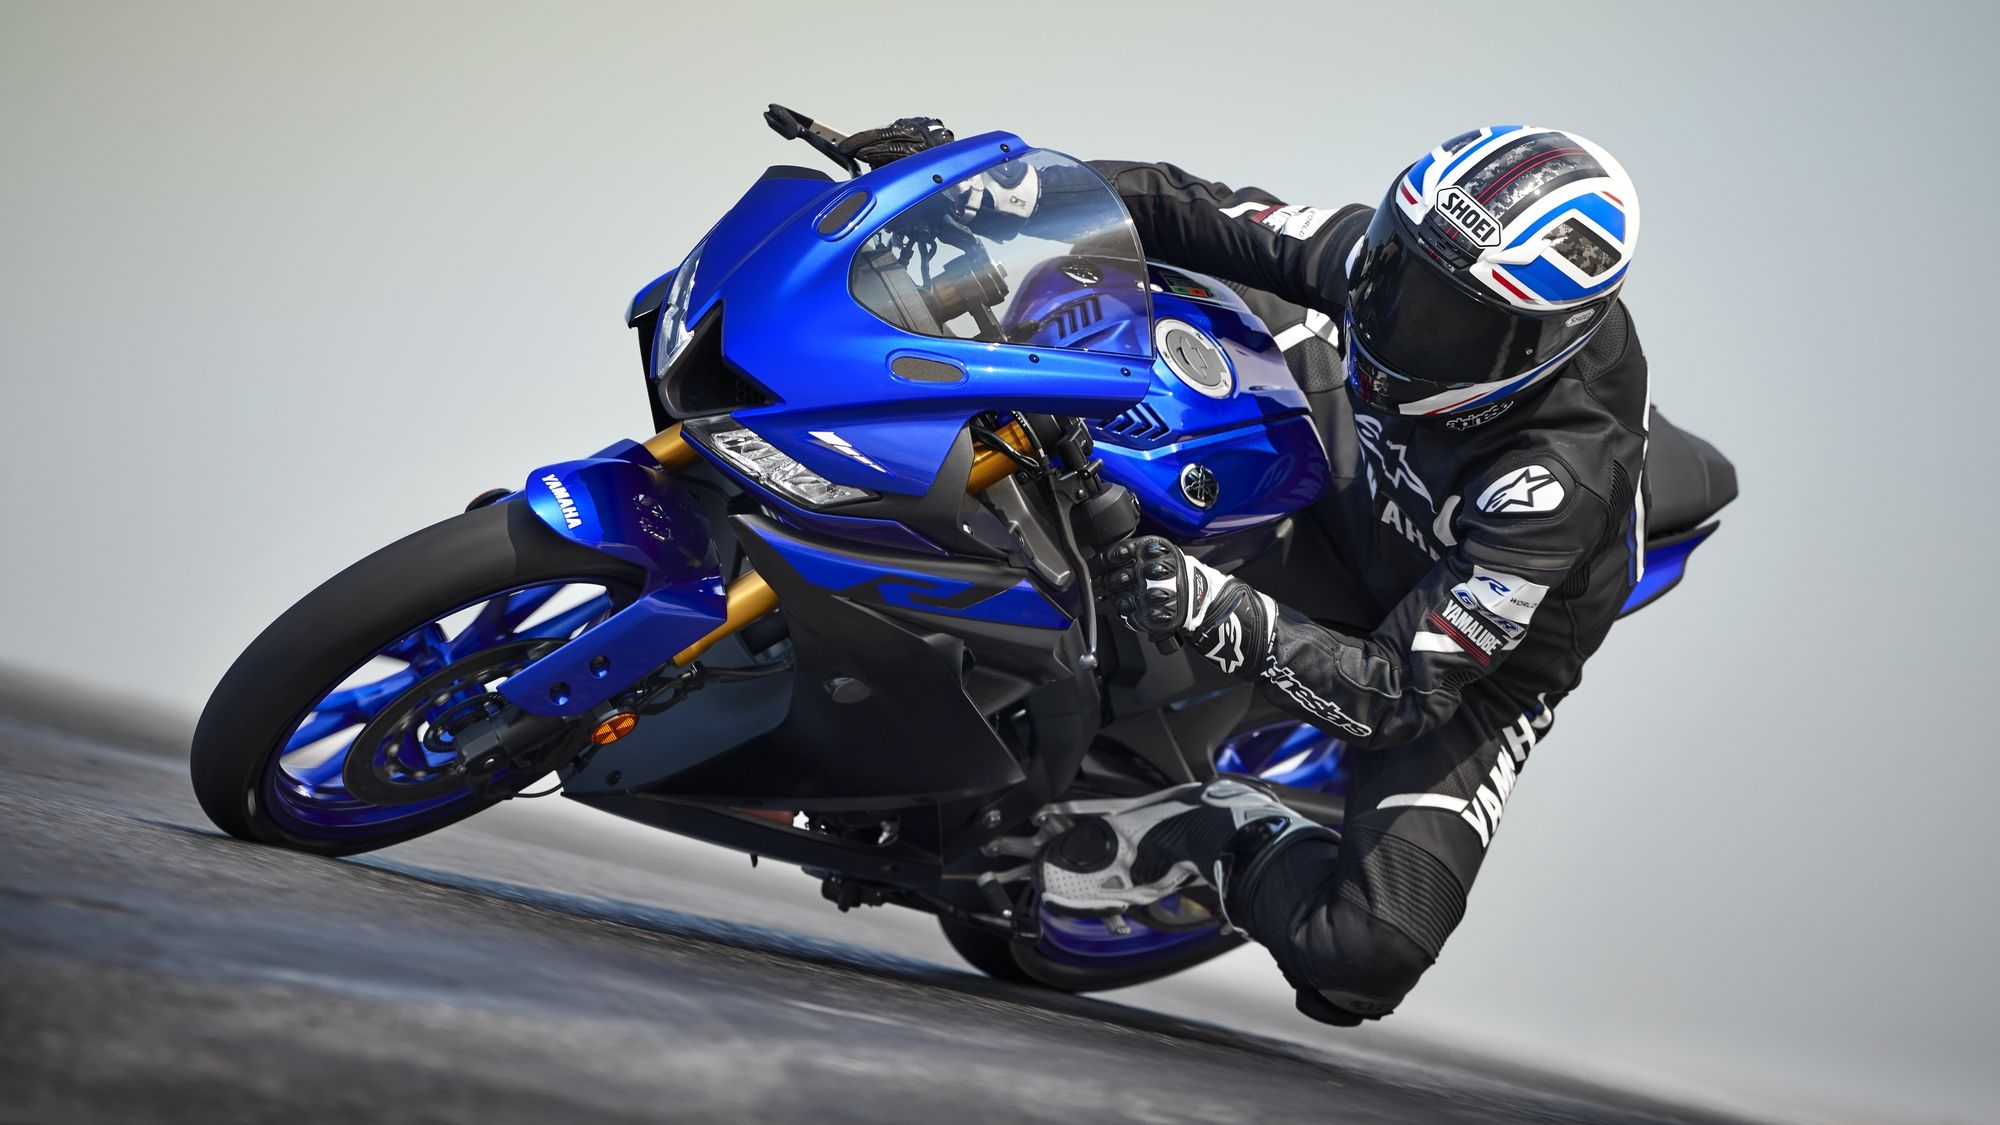 2019 - 2022 Yamaha YZF-R125 - Performance, Price, and Photos